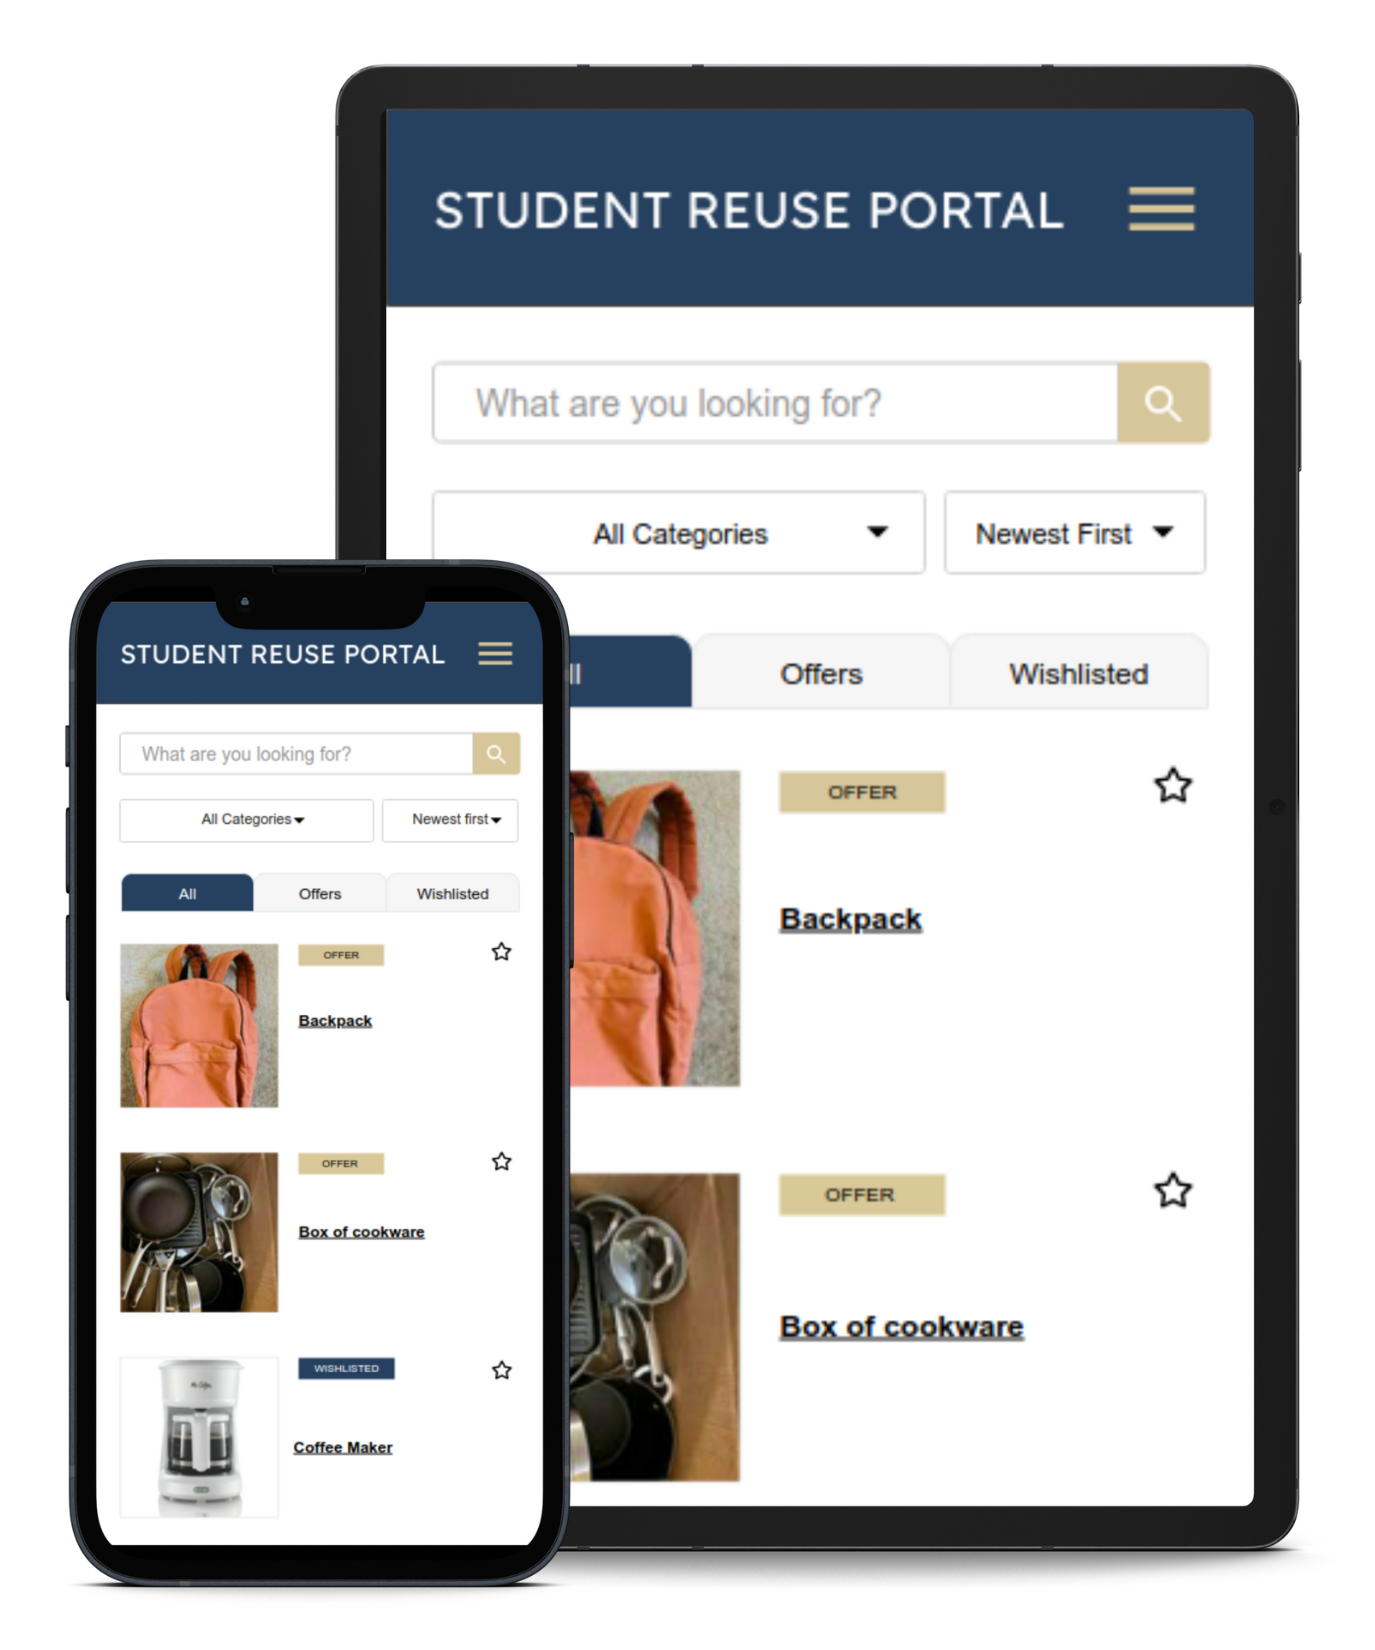 Student Reuse Portal